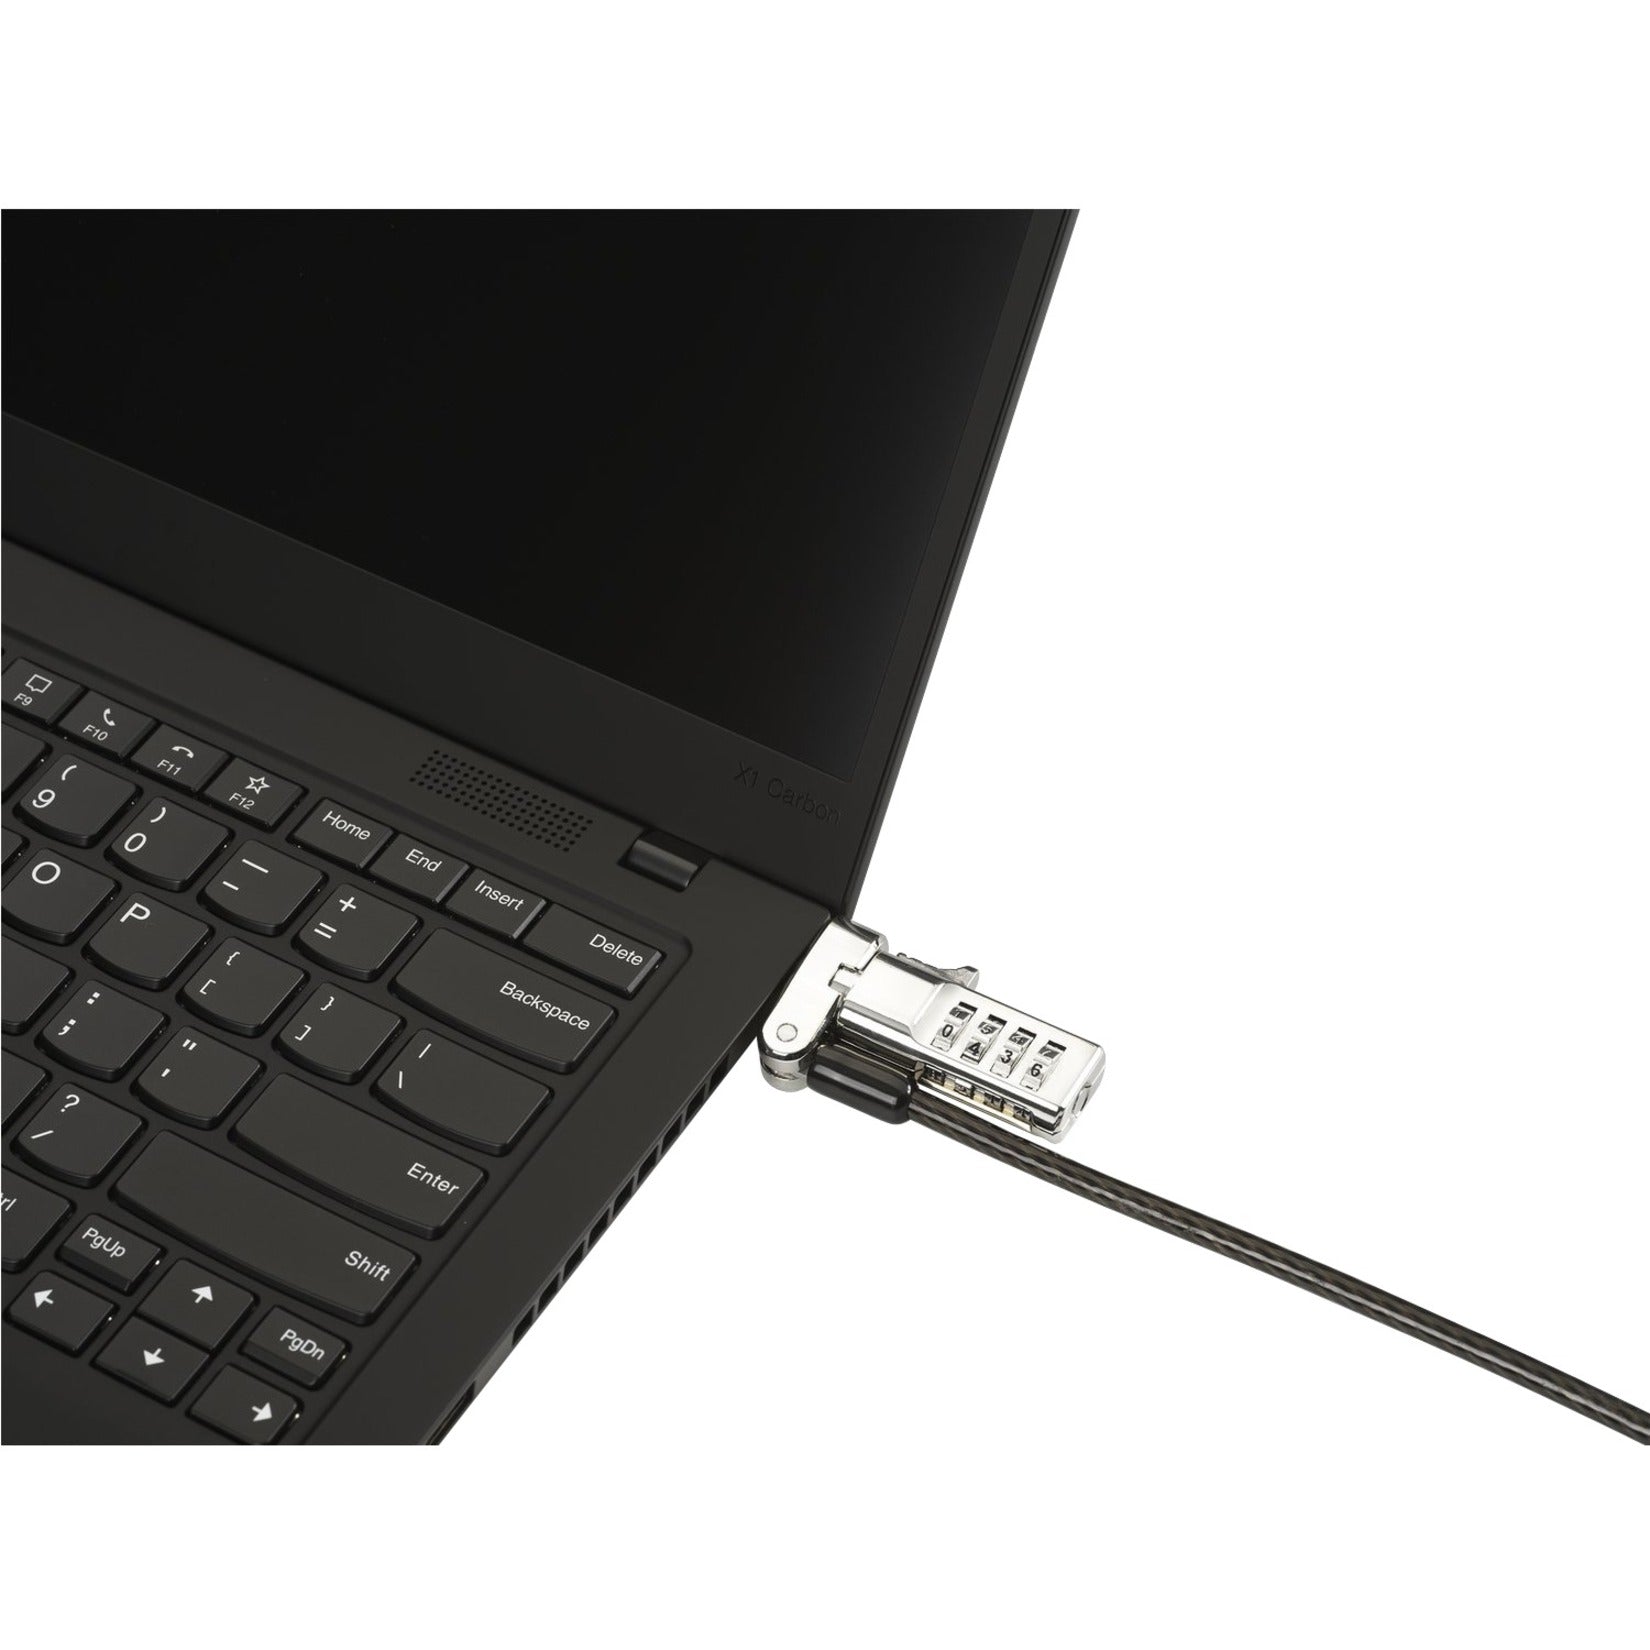 Kensington K62317WW 3-in-1 Combination Serialized Laptop Lock, 6 ft Cable Length, Preset Combination Lock